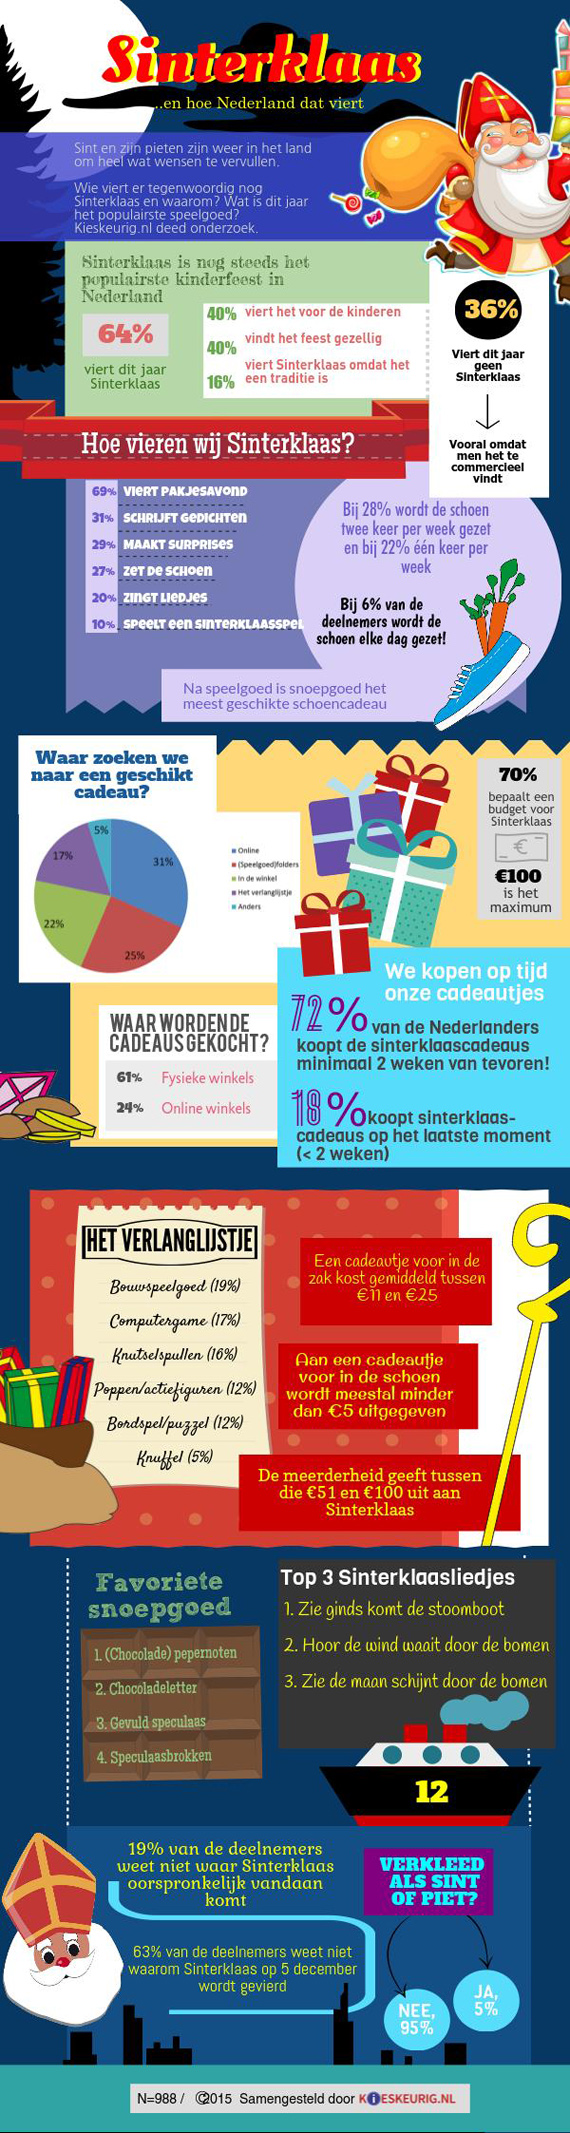 Infographic Sinterklaas 2015